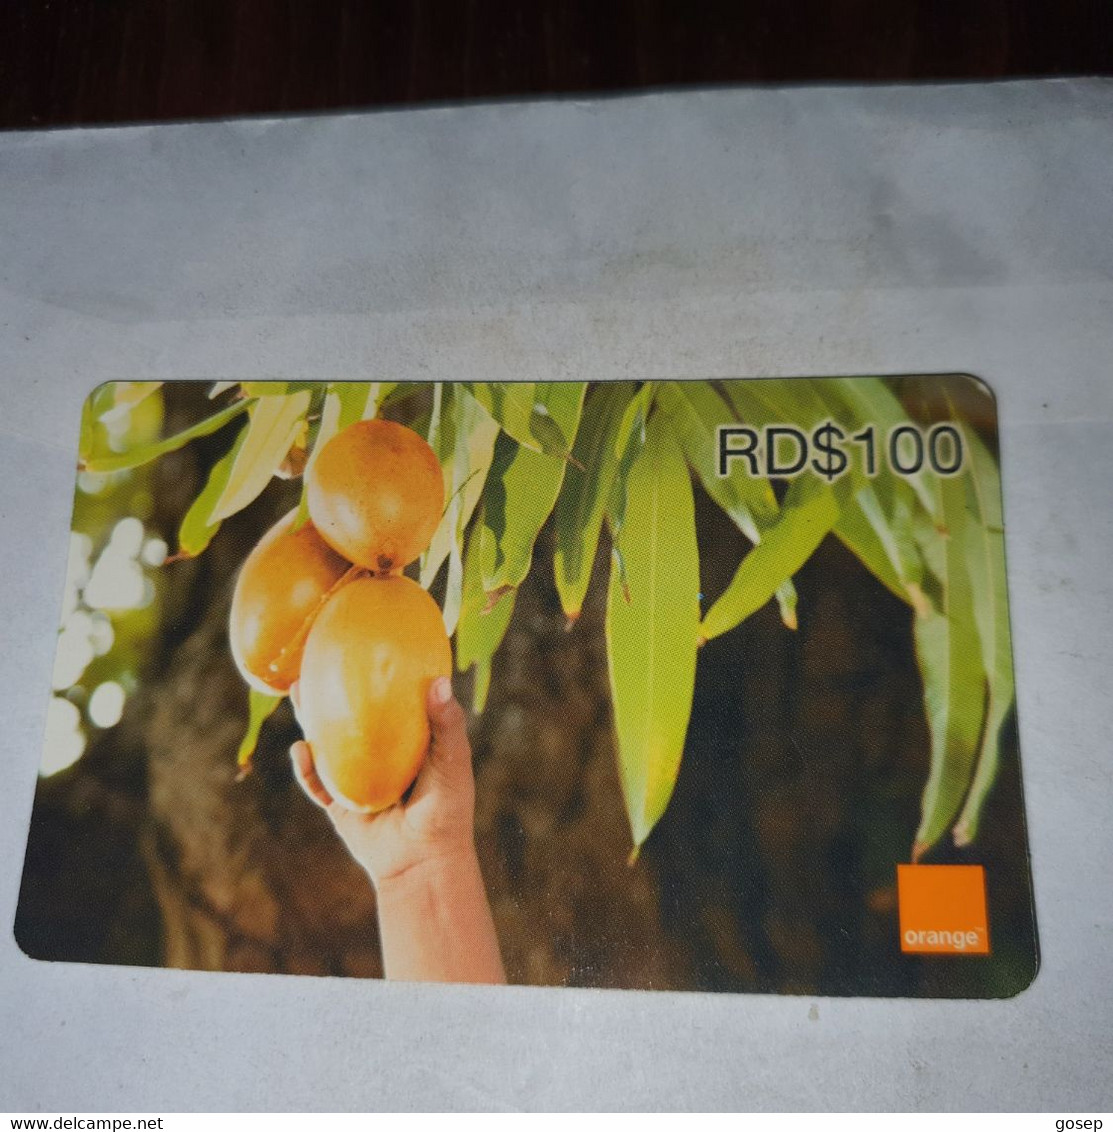 Dominicana-(orange-29rd$100)-(2480-9711-5590-70)-three Mango-(40)-(31.12.2010)-used Card+1card Prepiad Free - Dominicana